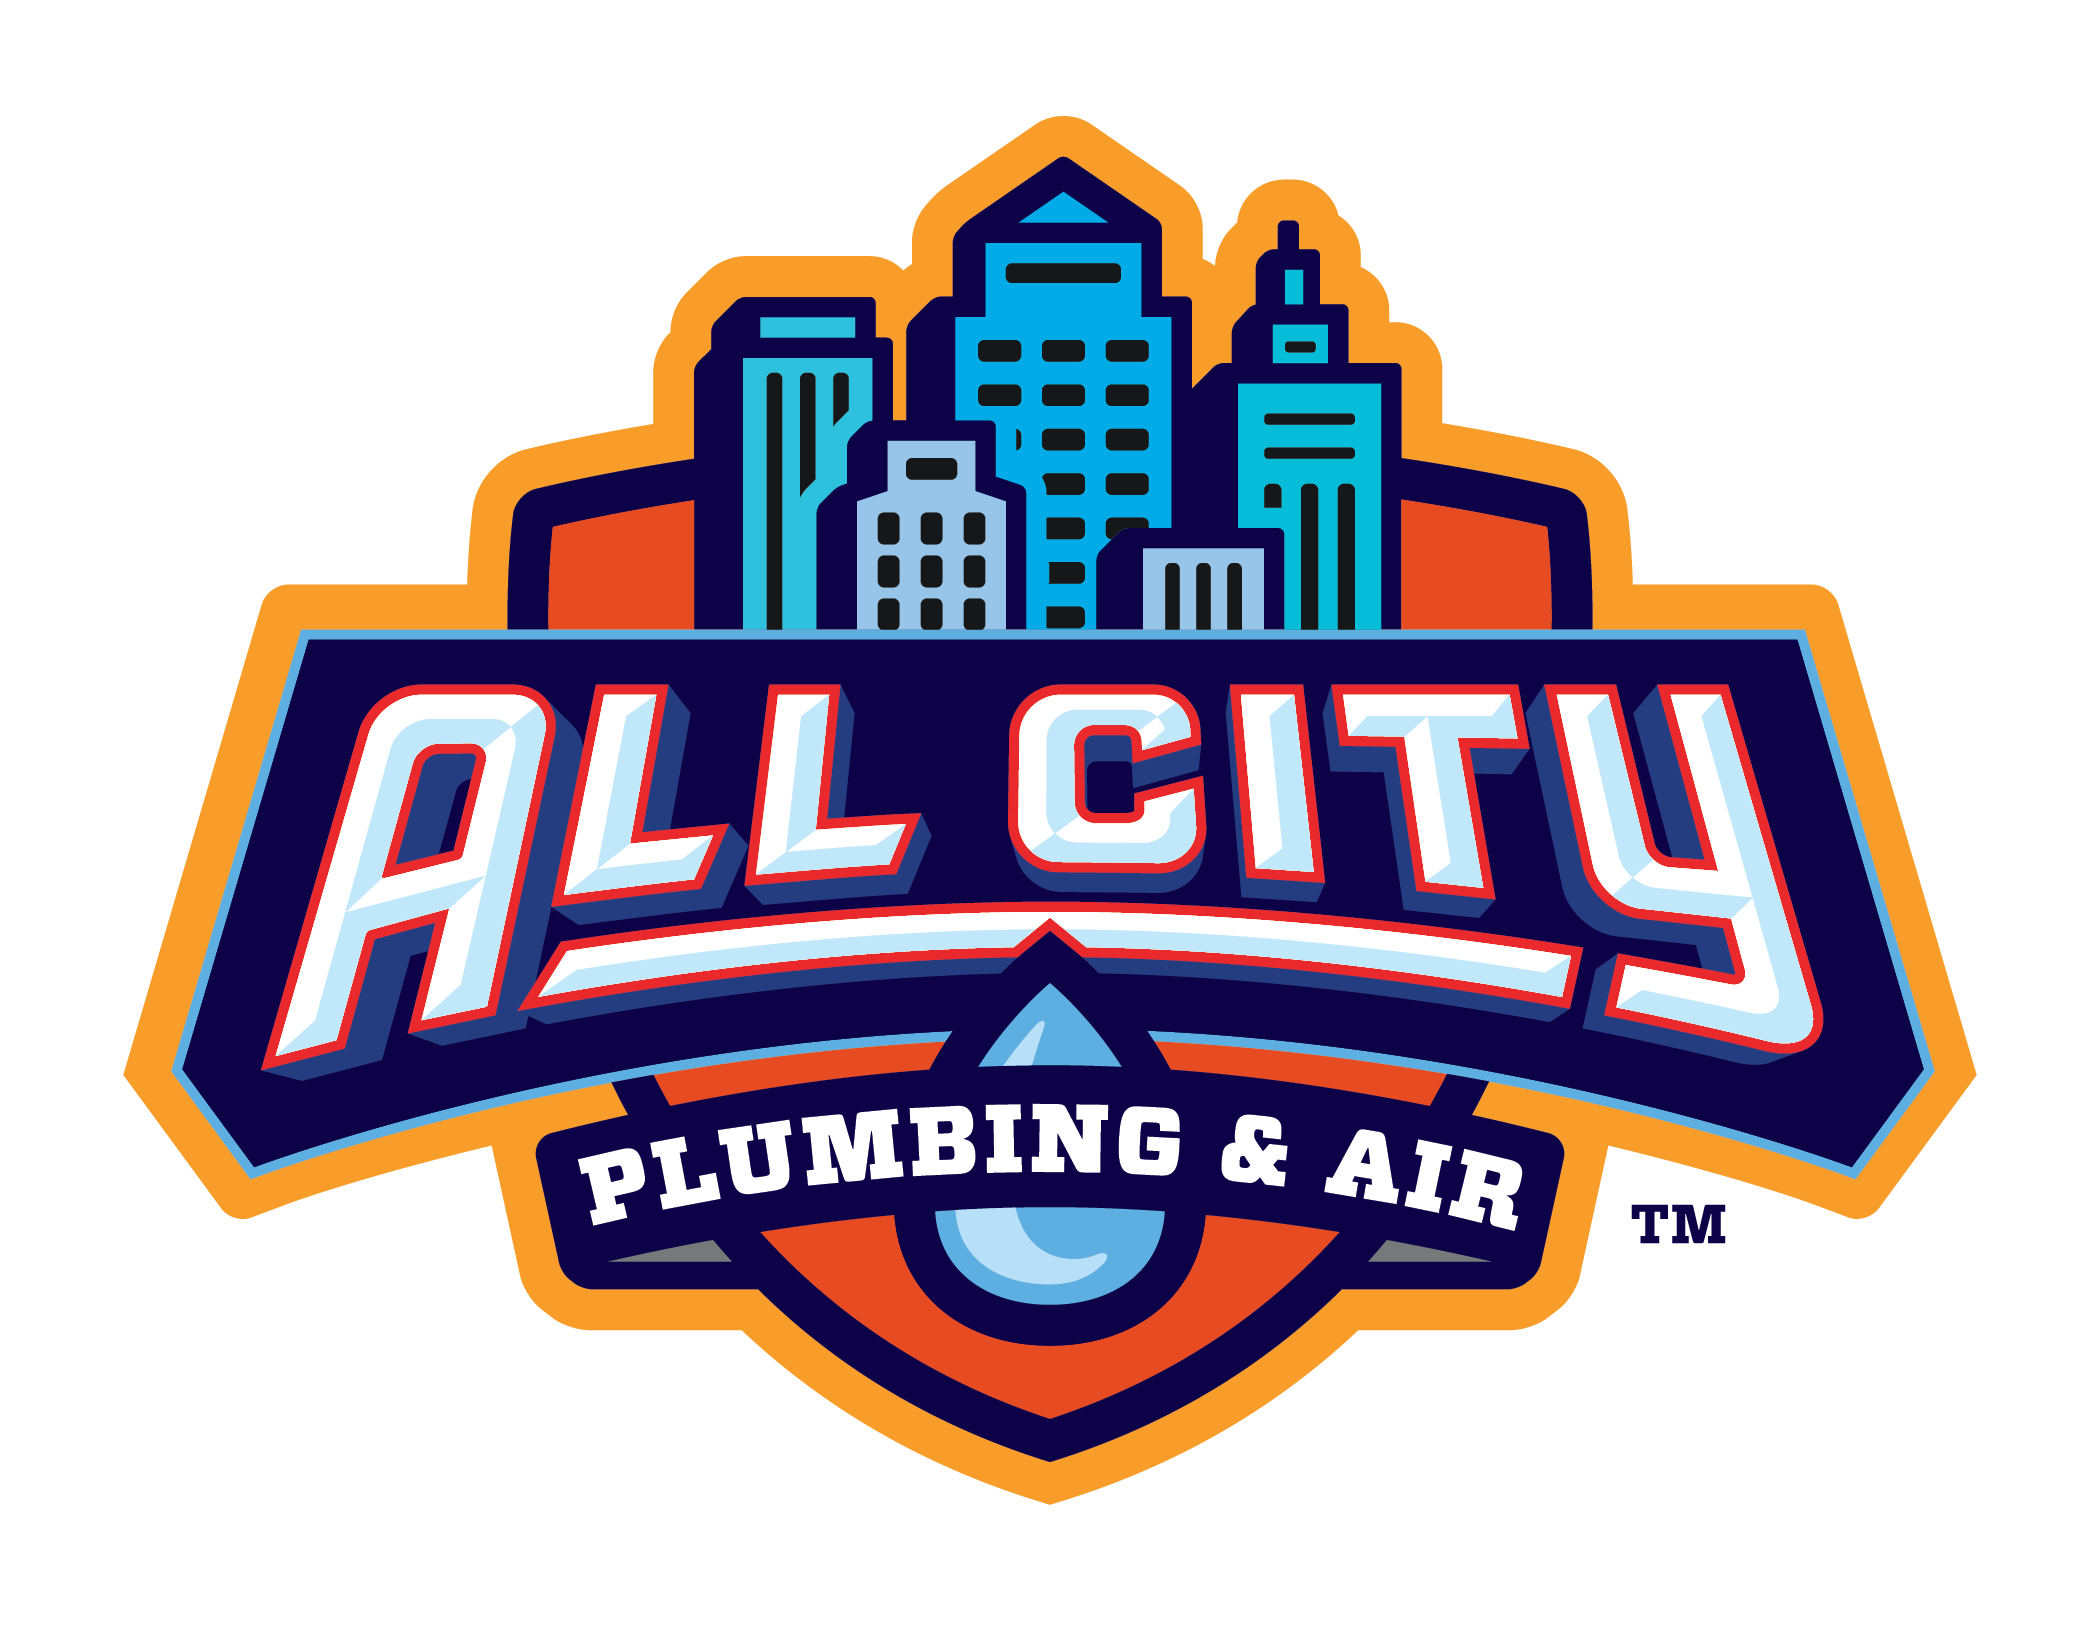 All City Plumbing & Air